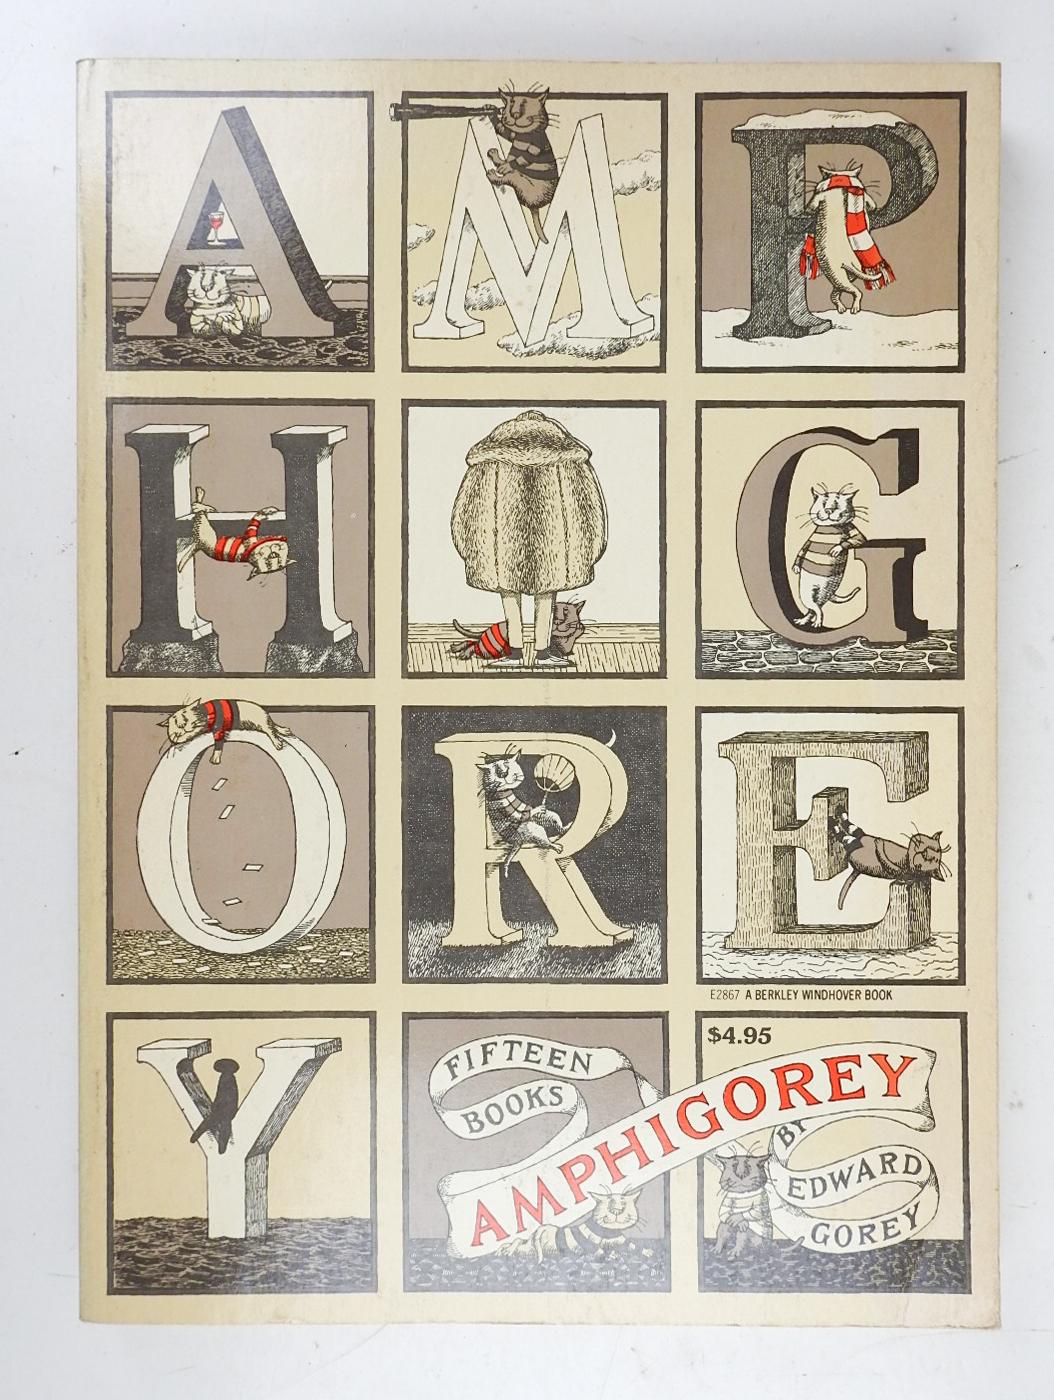 Amphigorey: Fifteen Books by Edward Gorey  Published by Berkley Windhover, New York, 1975.  Edward St. John Gorey was an American writer, Tony Award-winning costume designer, and artist.  Illustrated softcover binding, edge wear.